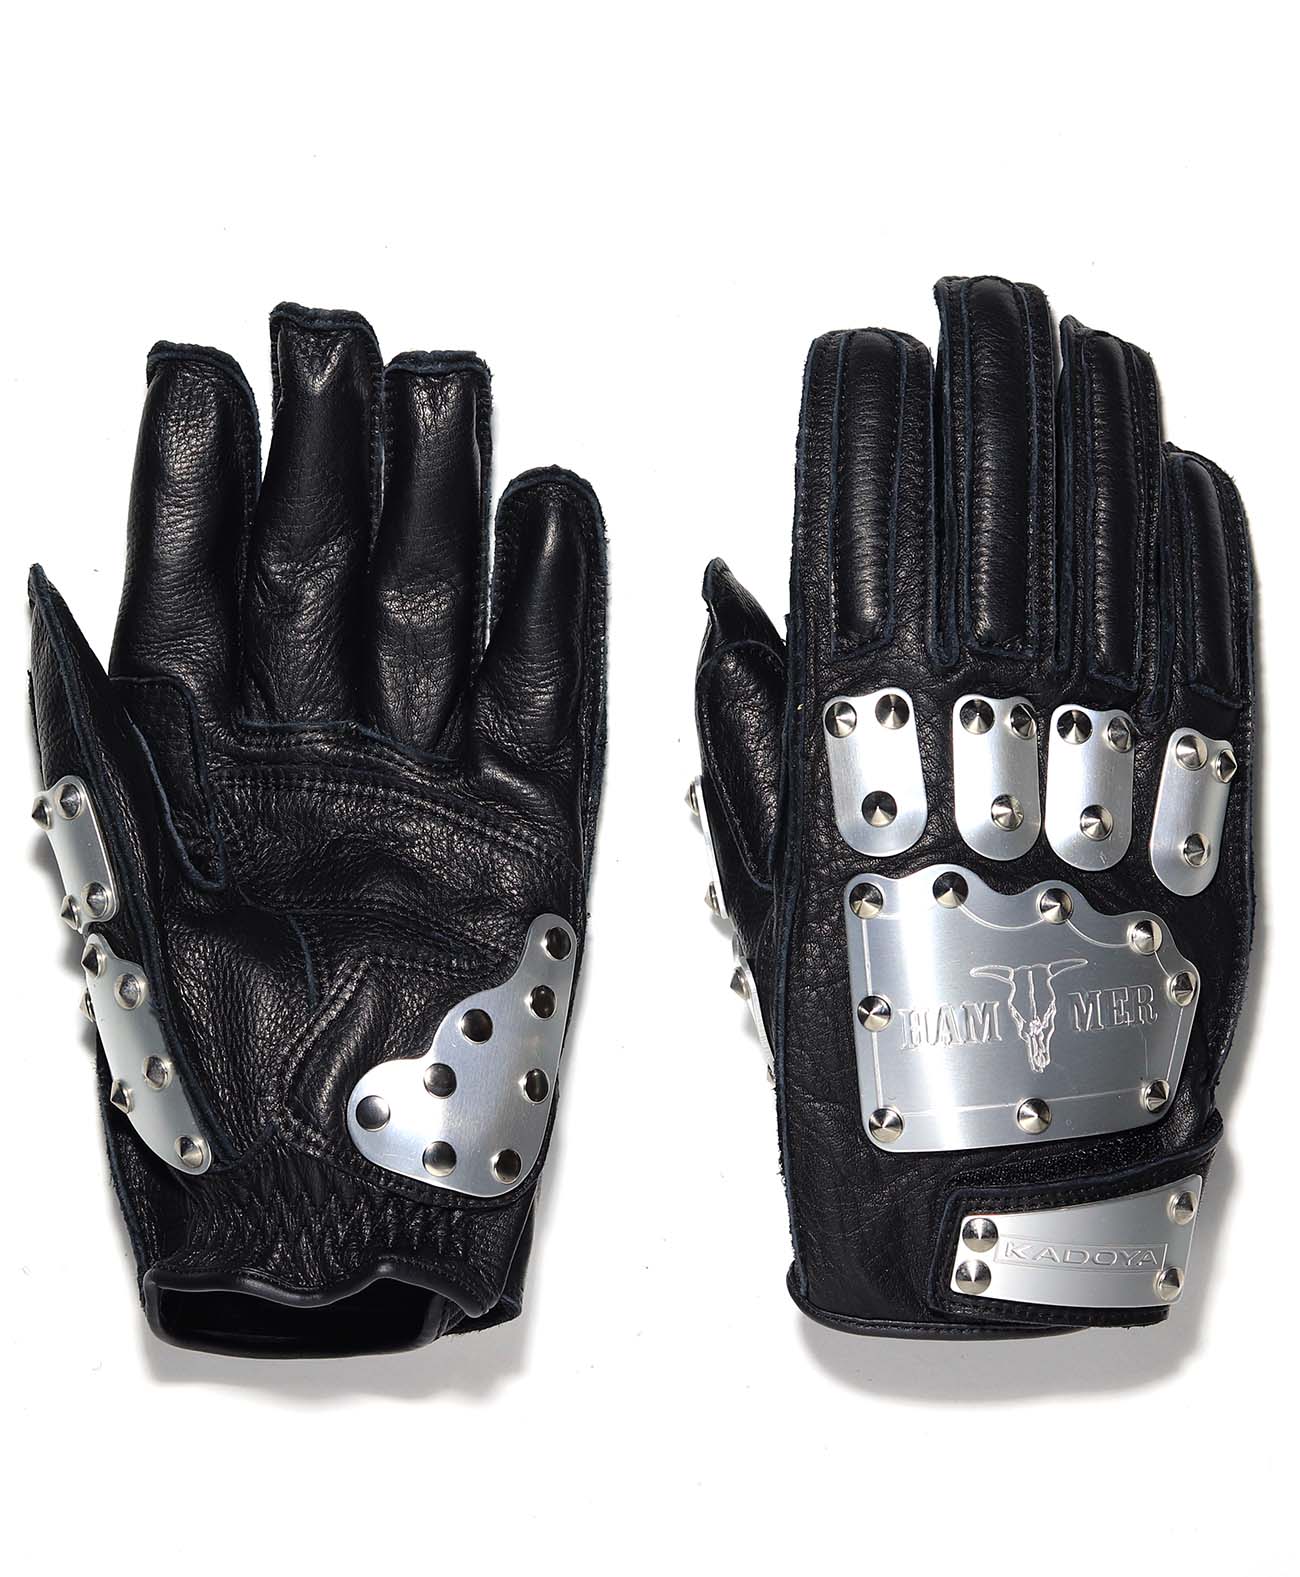 Hammer Glove A / Silver/Black